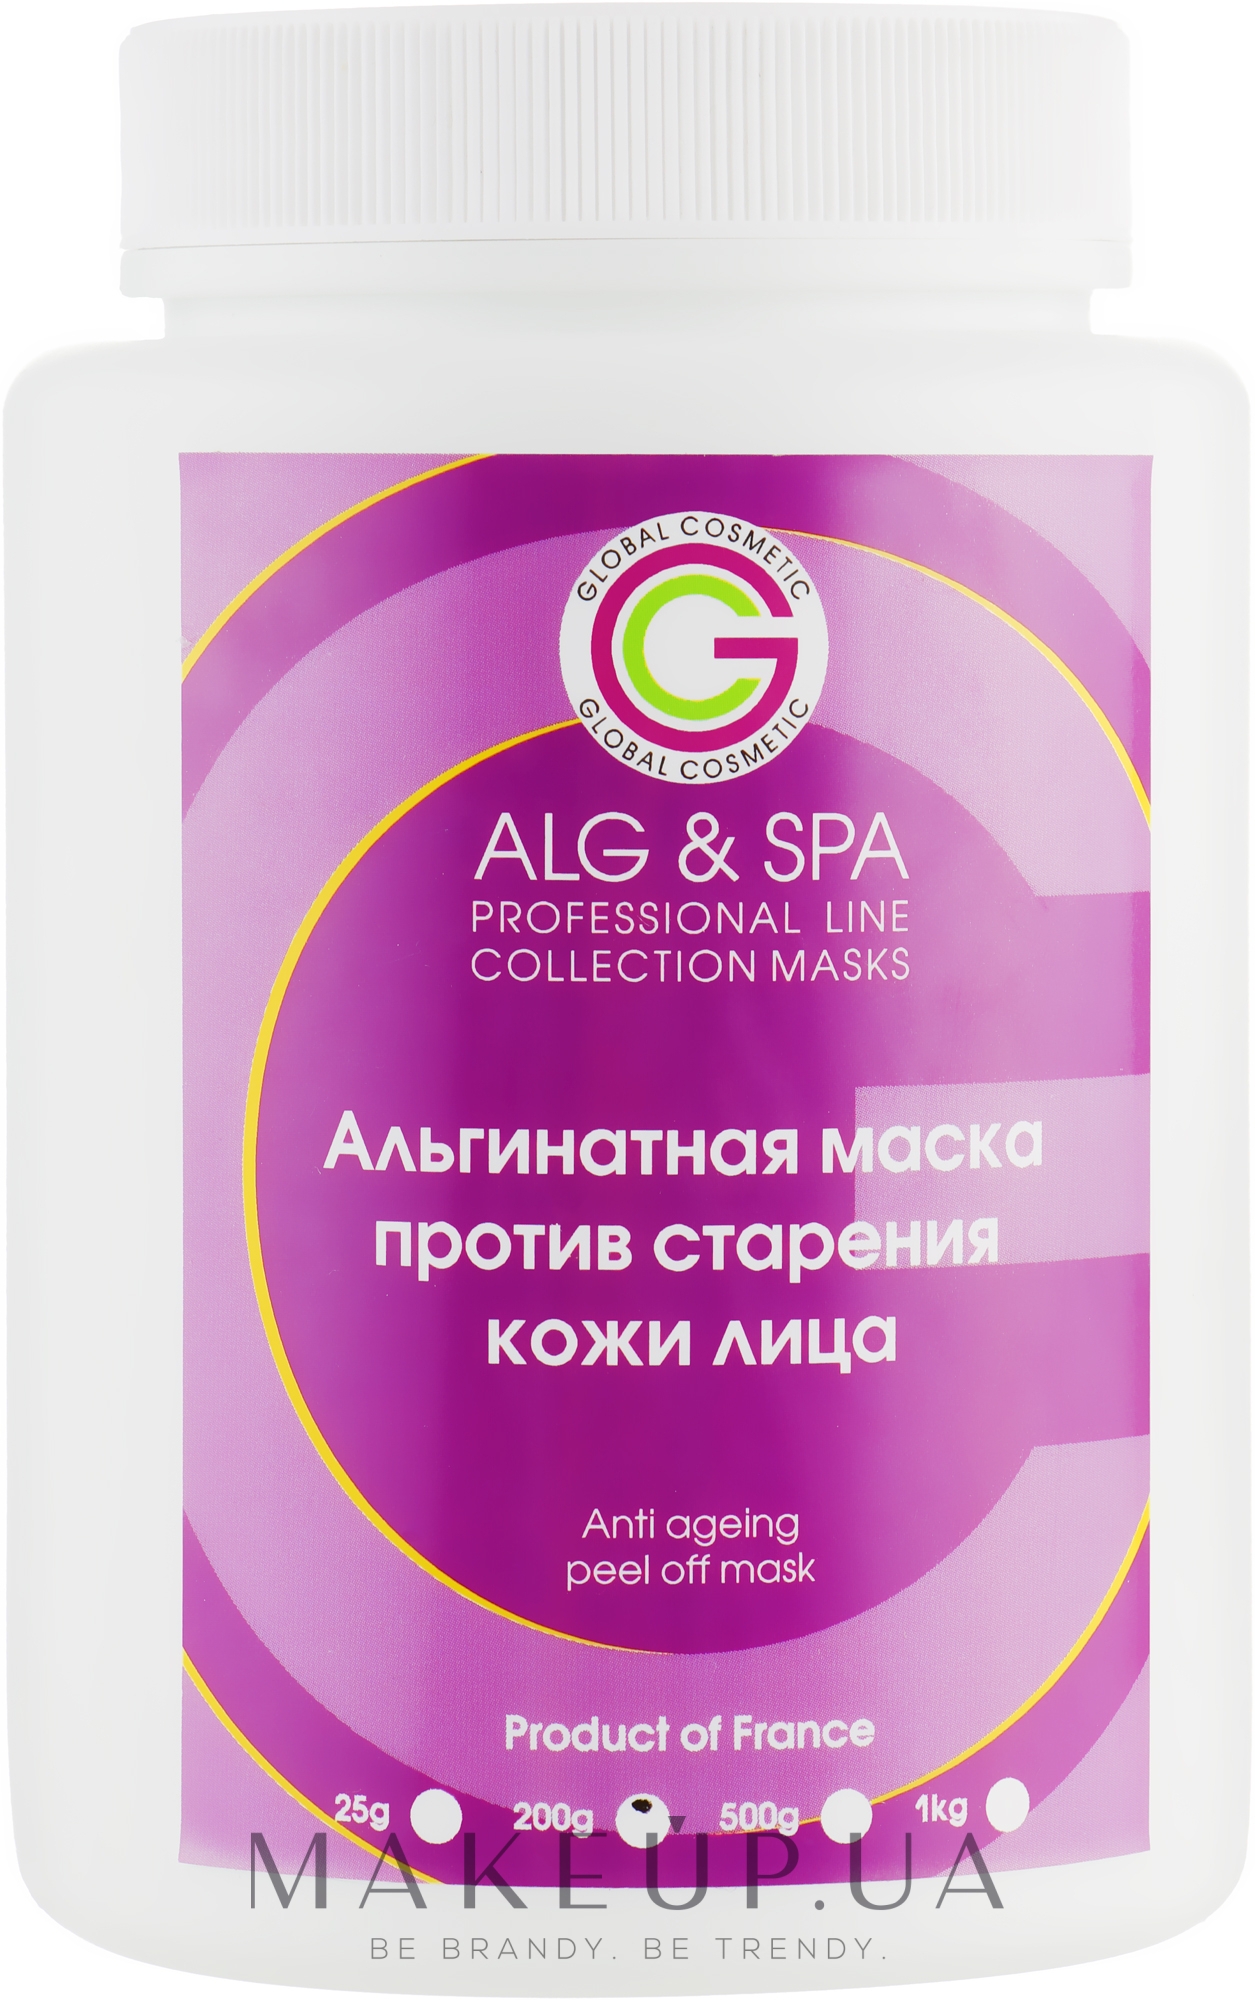 Альгинатная маска против старения кожи лица - ALG & SPA Professional Line Collection Masks Anti Ageing Peel off Mask — фото 200g